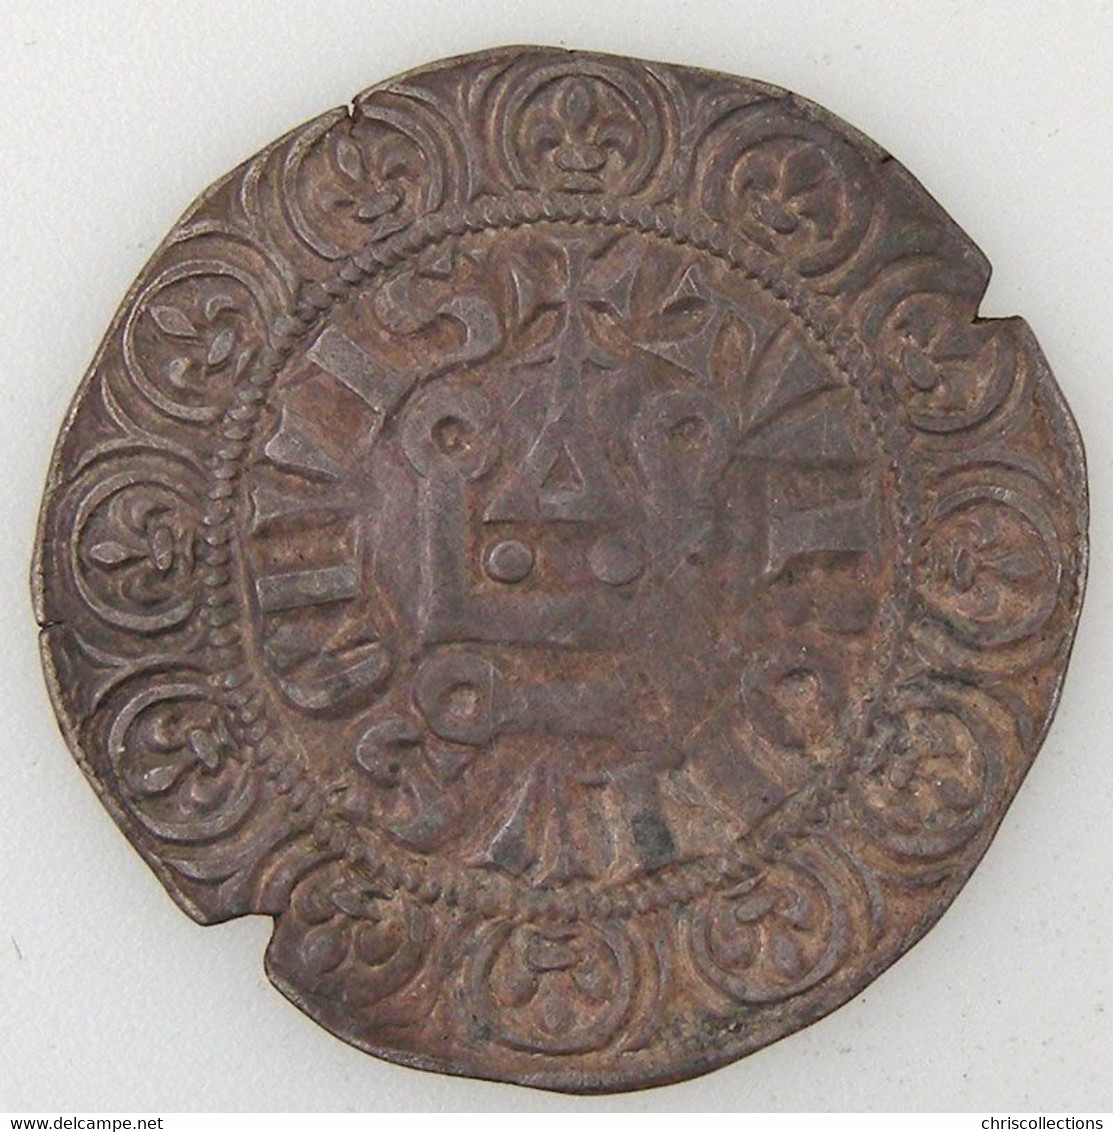 France, Philippe IV, Gros Tournois , TTB/TTB, Dup: 213 - 1285-1314 Philipp IV Der Schöne